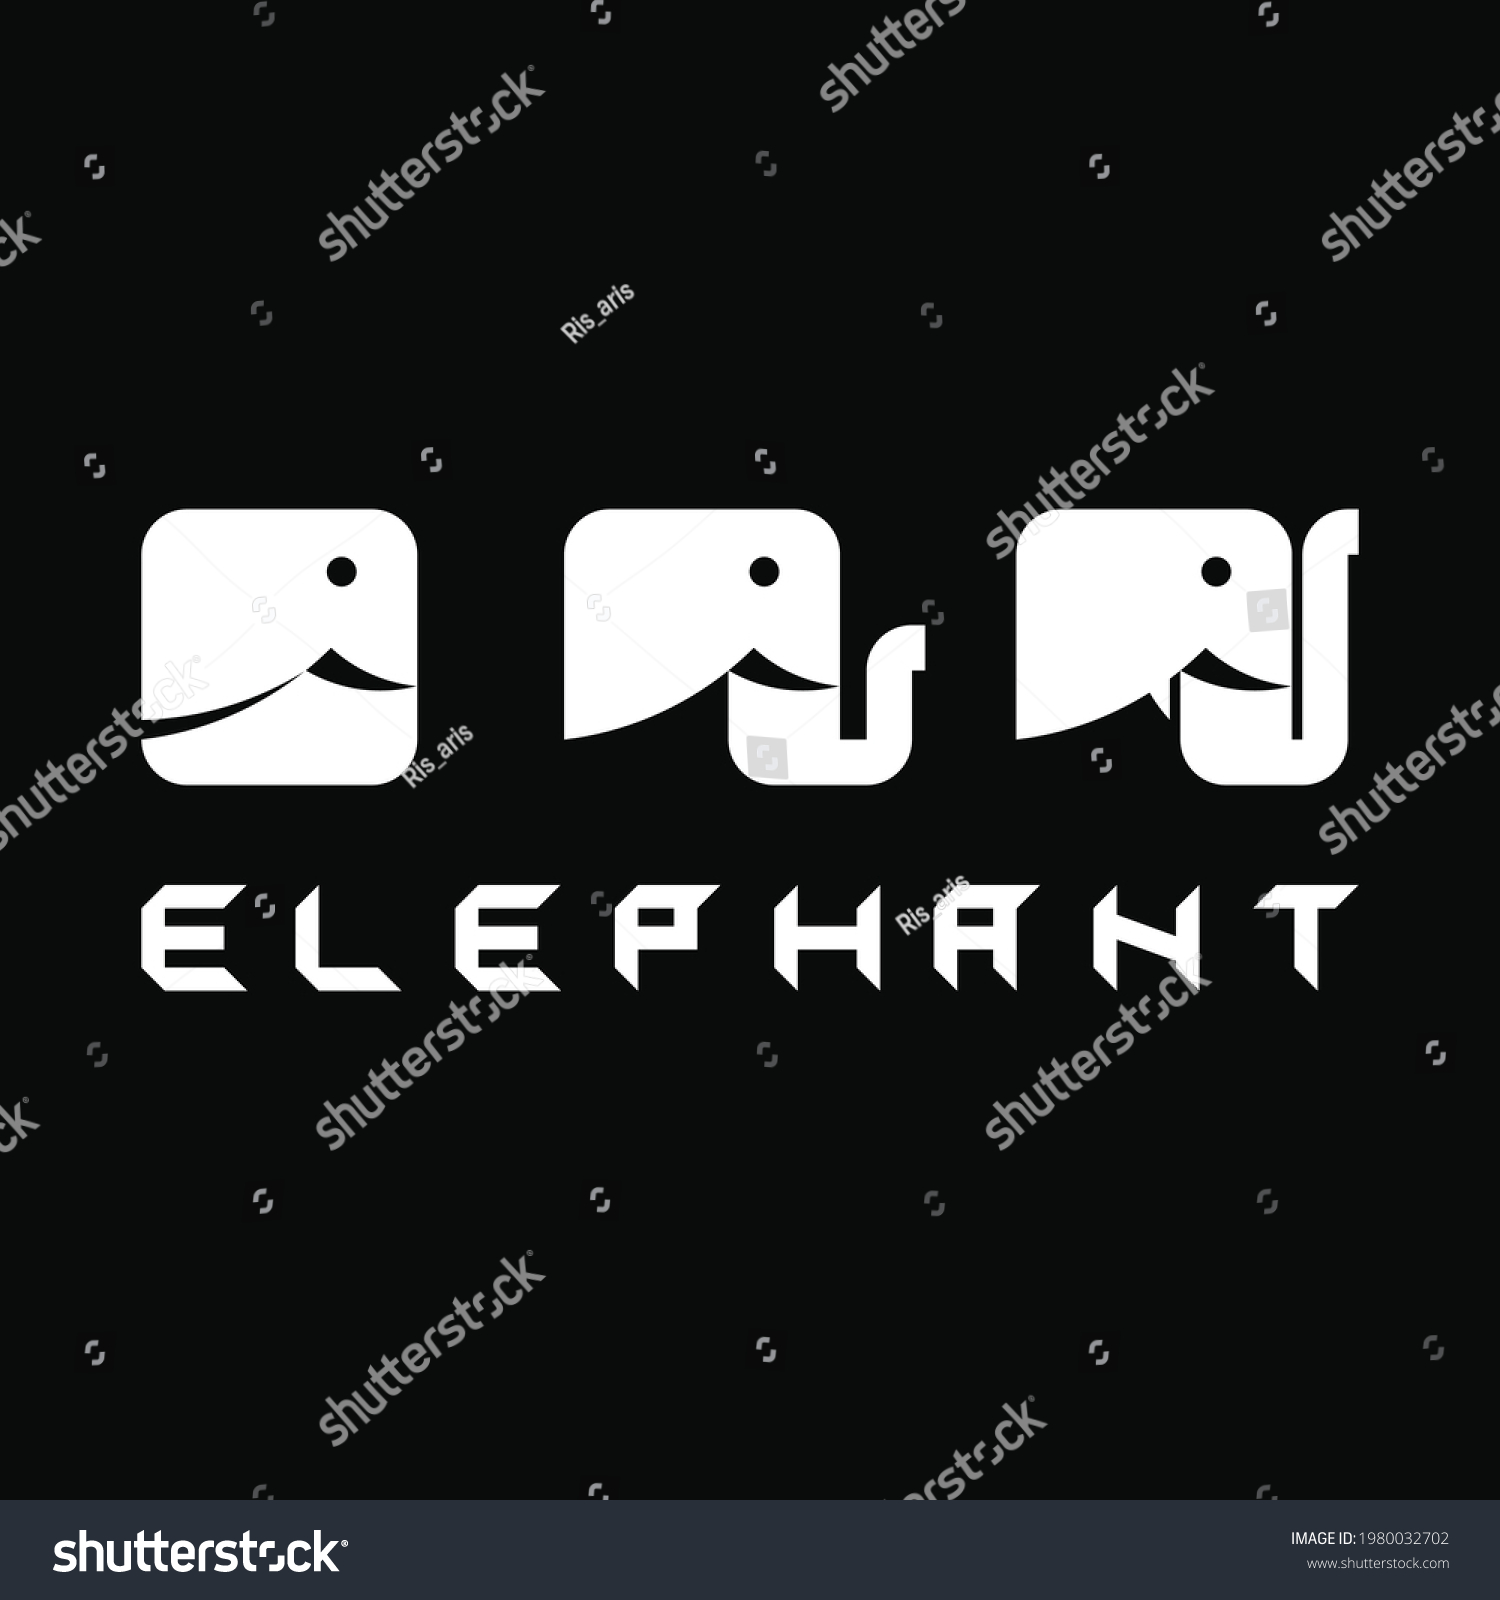 SVG of Three Elephant Heads Logo. Elephant Logo. Animal Logo. Head logo. Black and White. For Logo,Icon,Symbol and sign svg